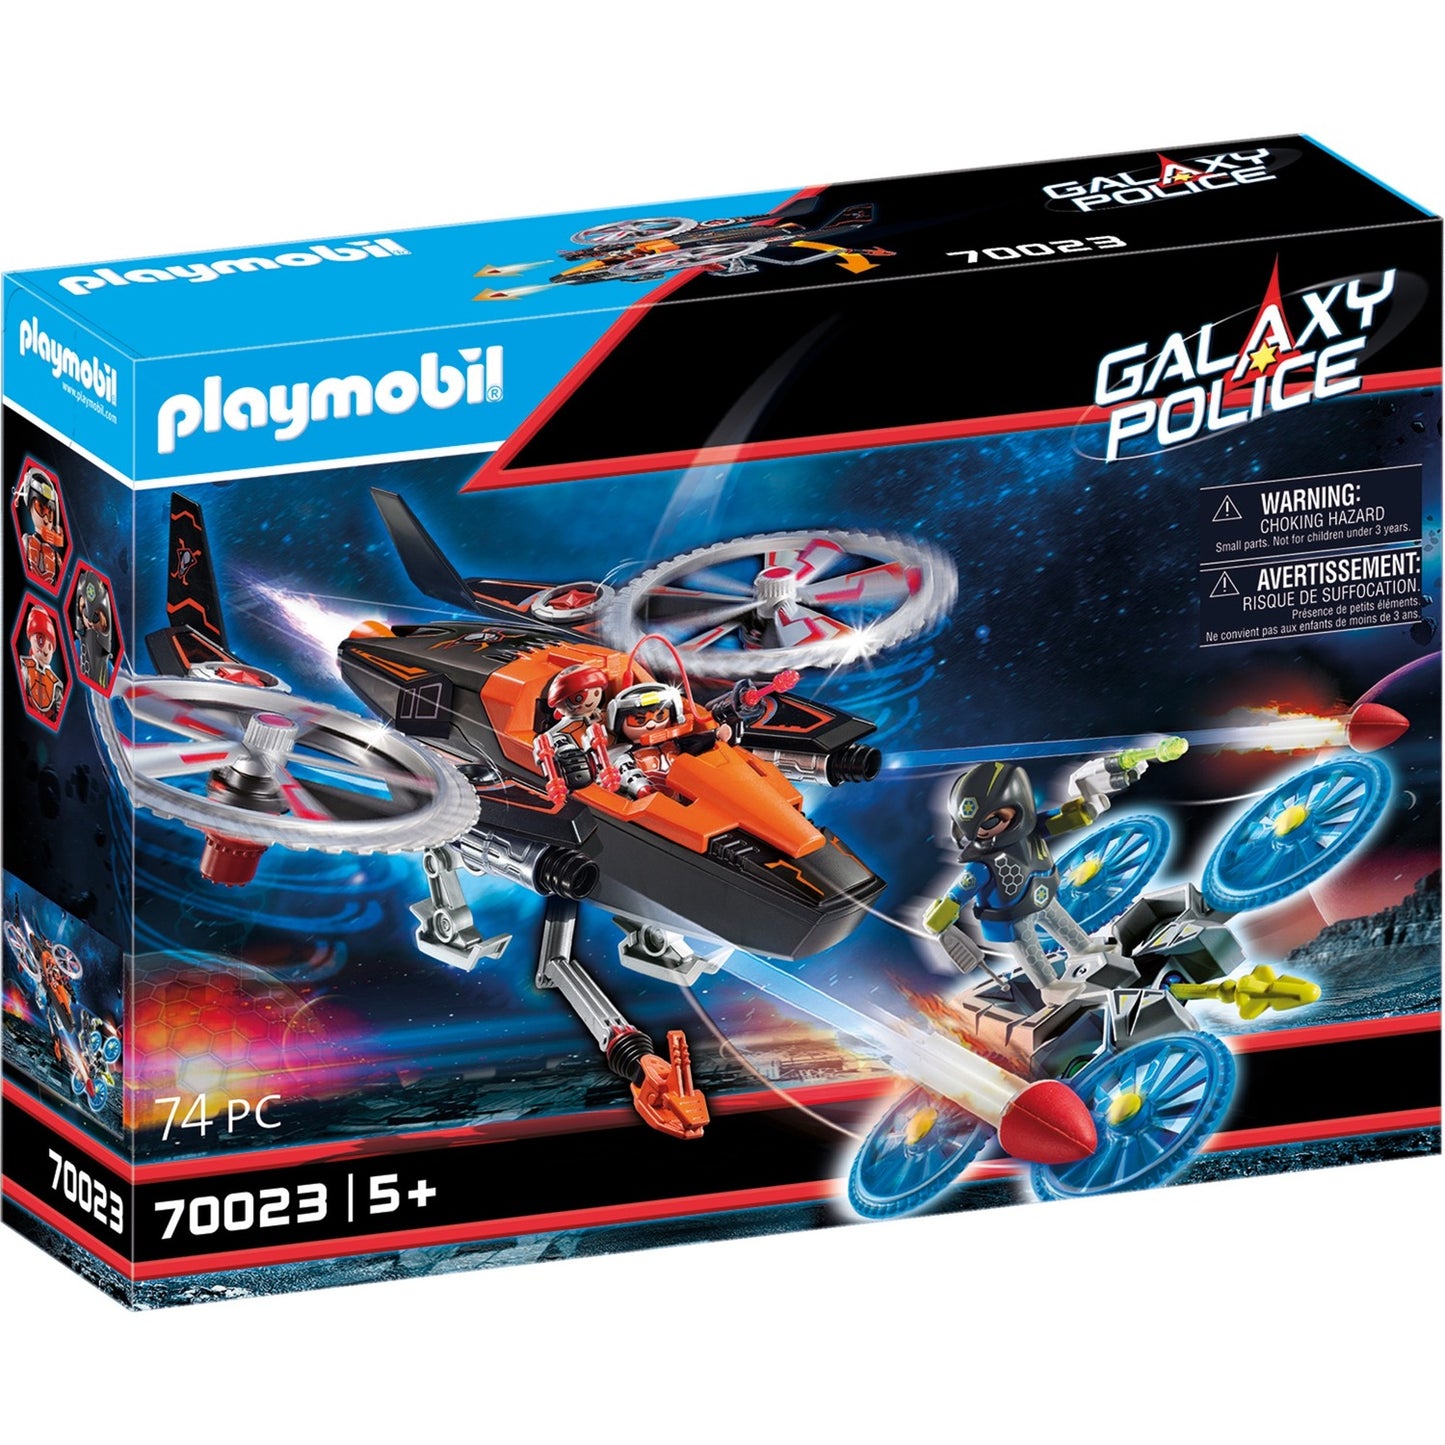 PLAYMOBIL Galaxy Police Galaxy piratenhelikopter